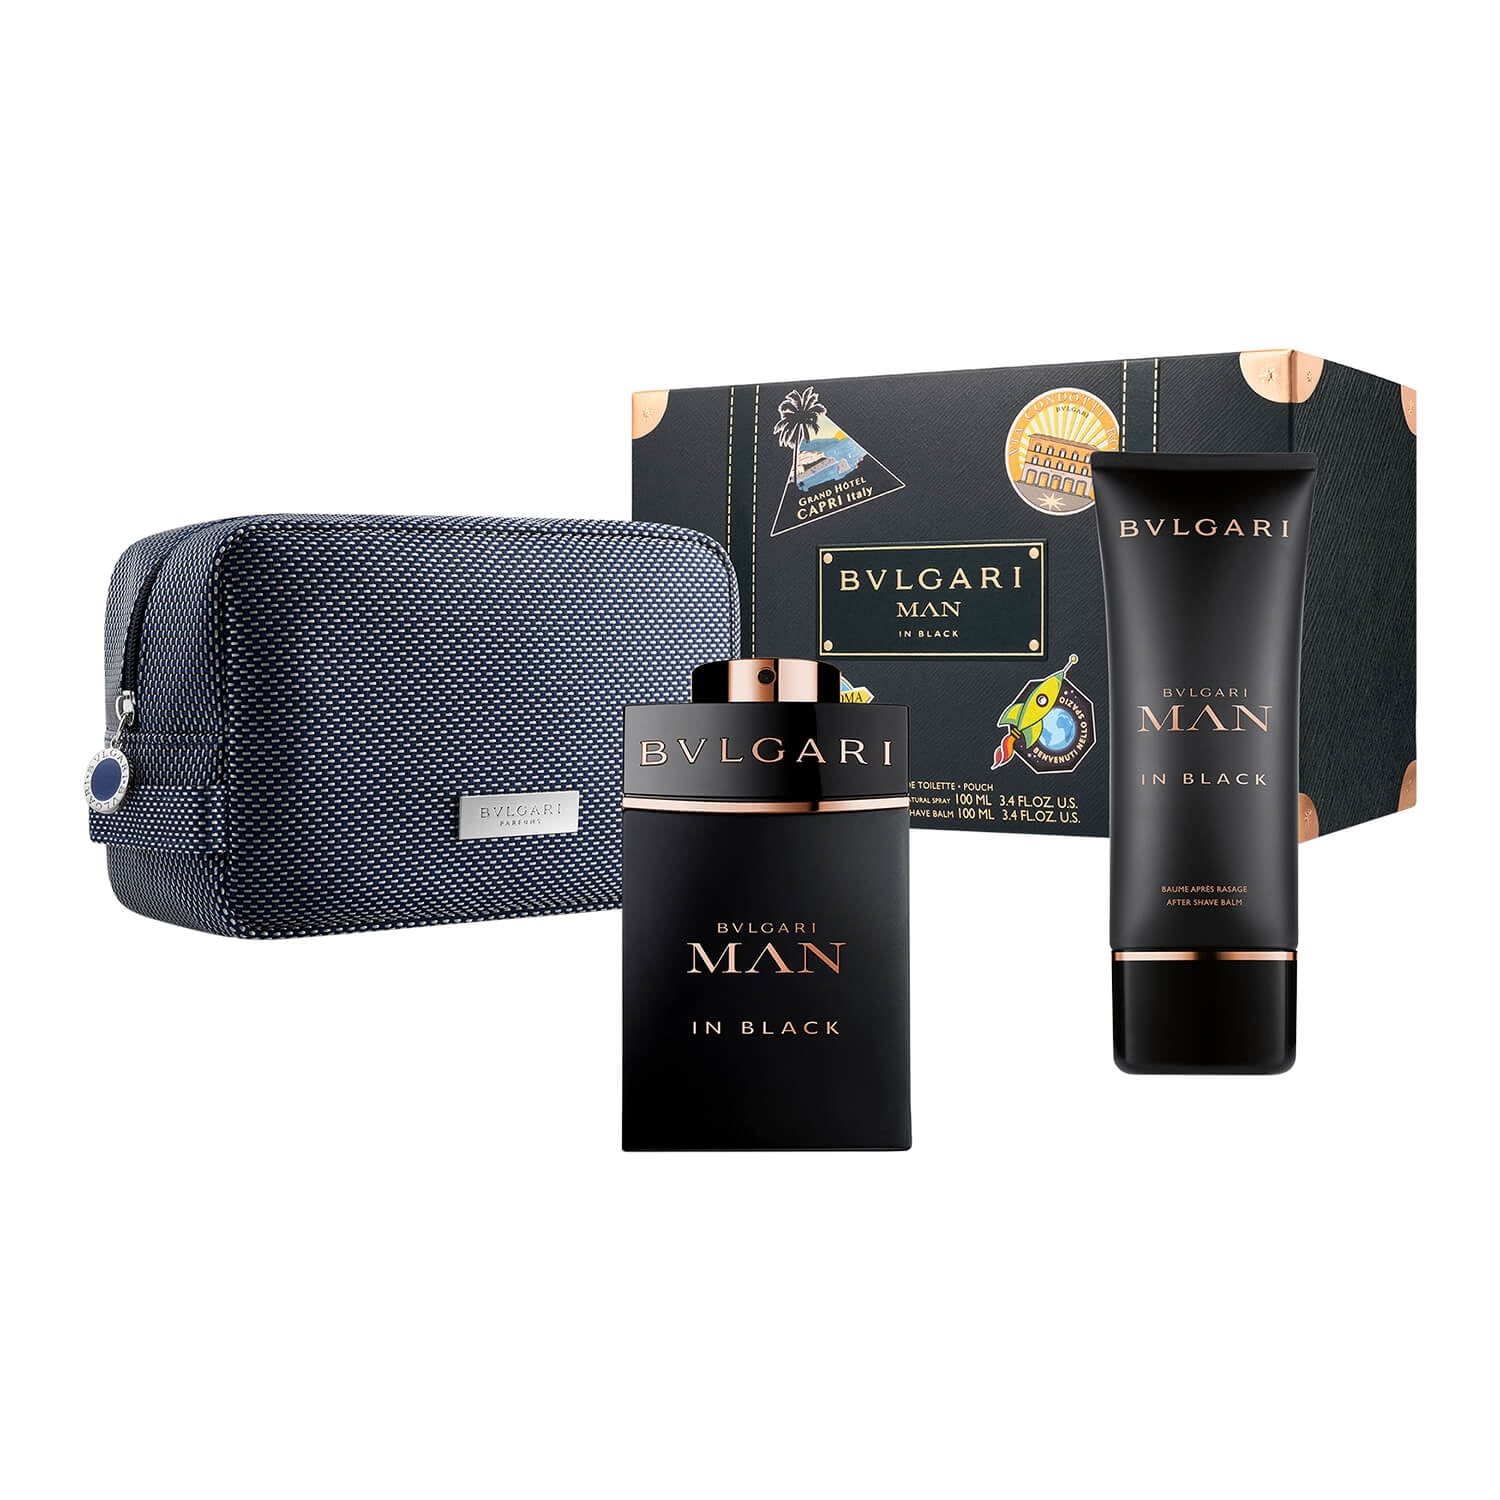 Kit Masculino Perfume Bvlgari Man In Black Eau de Parfum + Pós Barba Bvlgari Man In Black + Necessaire 